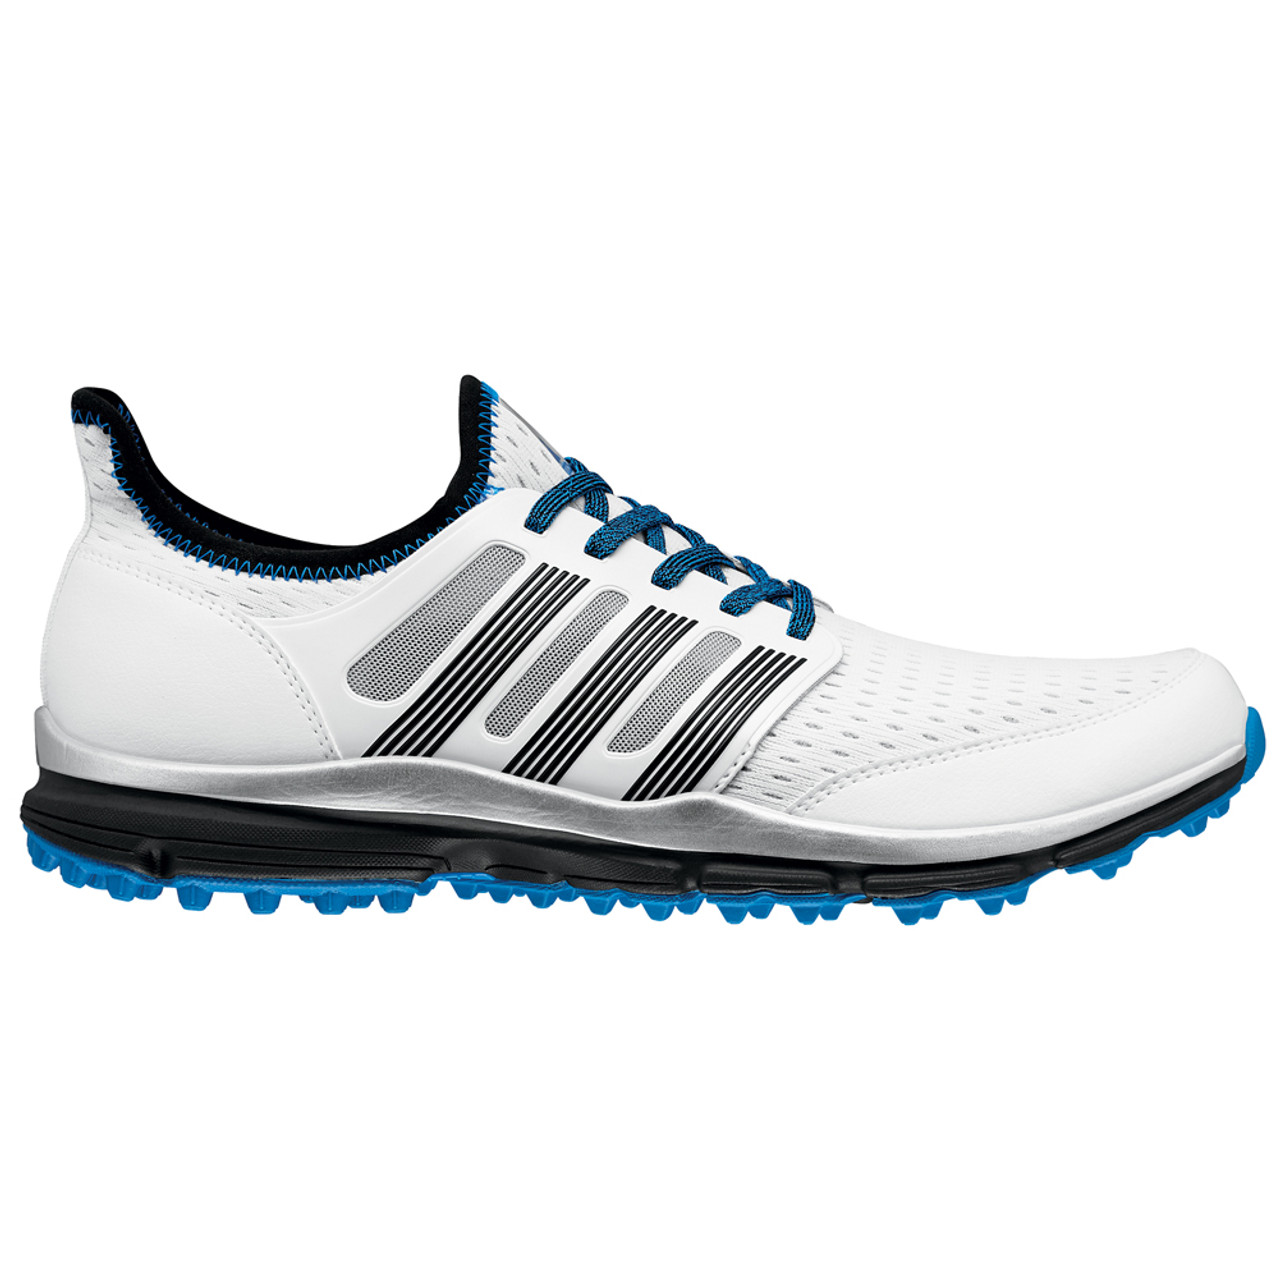 Footpad Retfærdighed forseelser Adidas Men's Climacool Golf Shoe - White | Discount Adidas Men's Athletic  Shoes & More - Shoolu.com | Shoolu.com